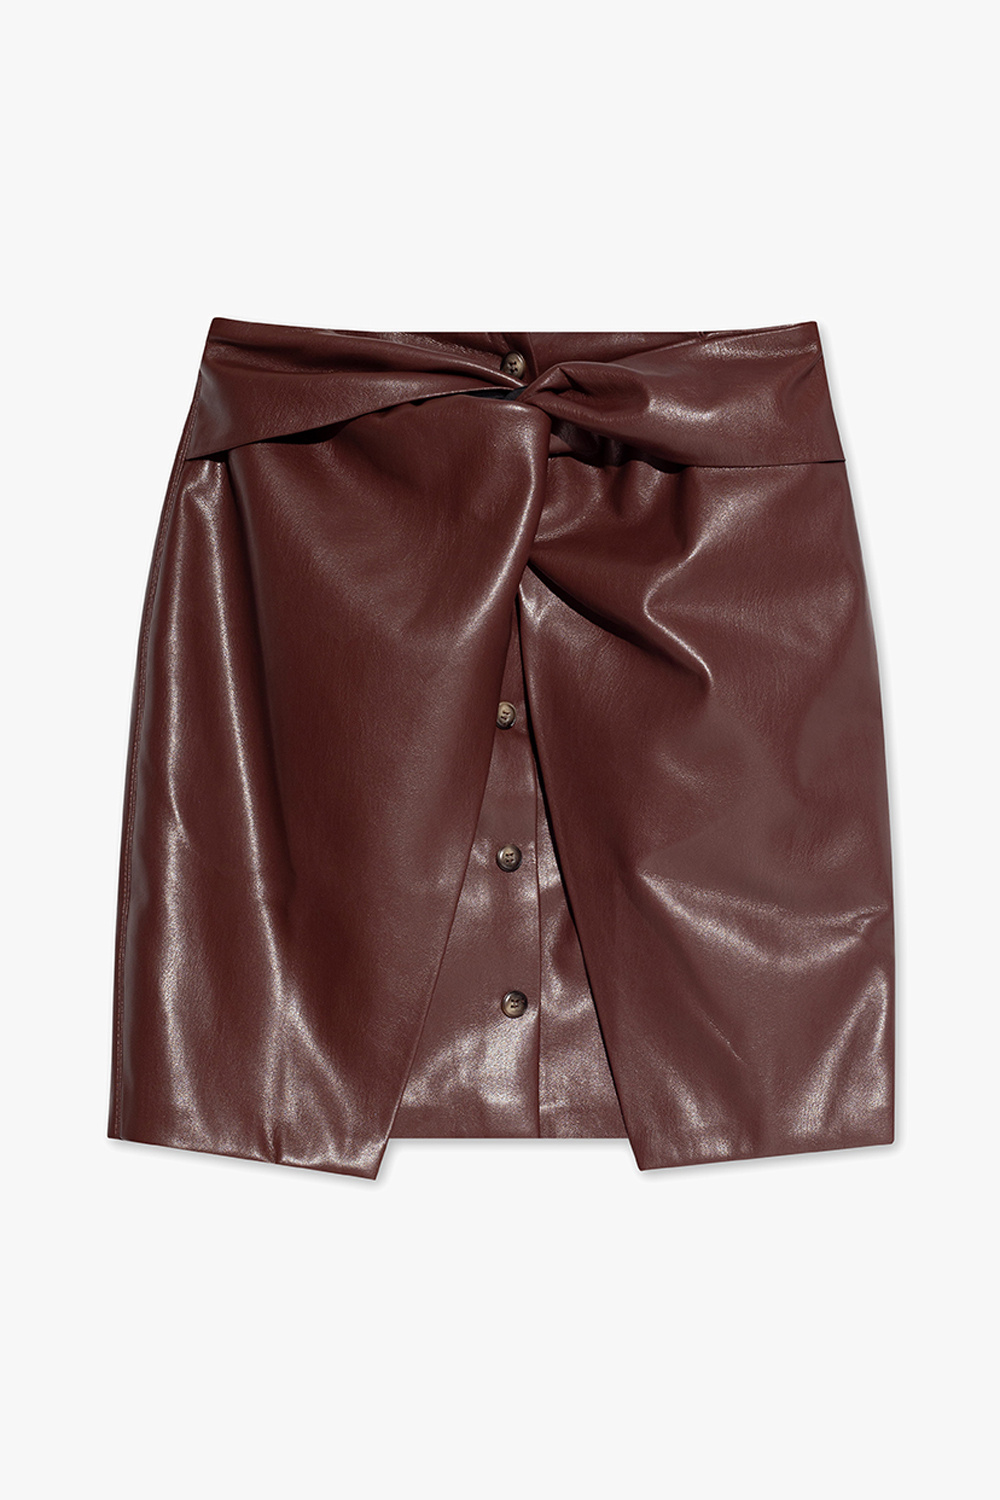 Nanushka ‘Danija’ vegan leather skirt